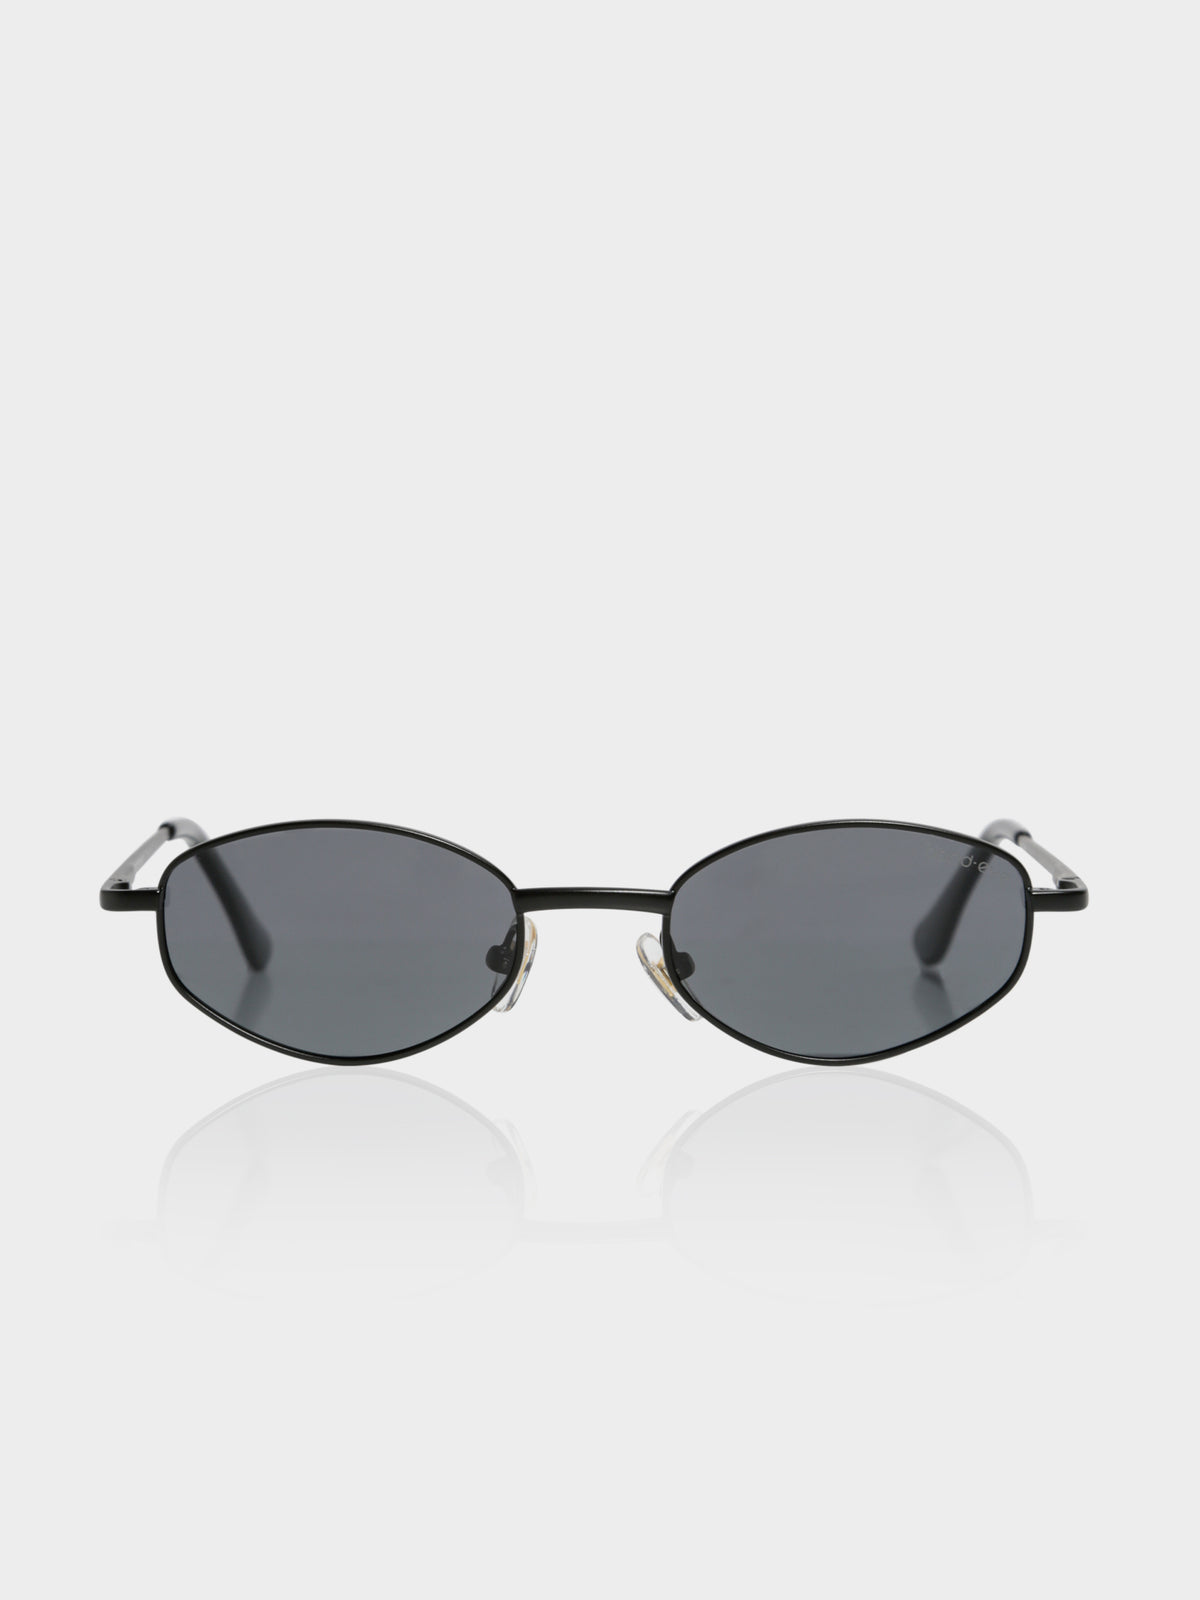 Woodstock Sunglasses in Matte Black